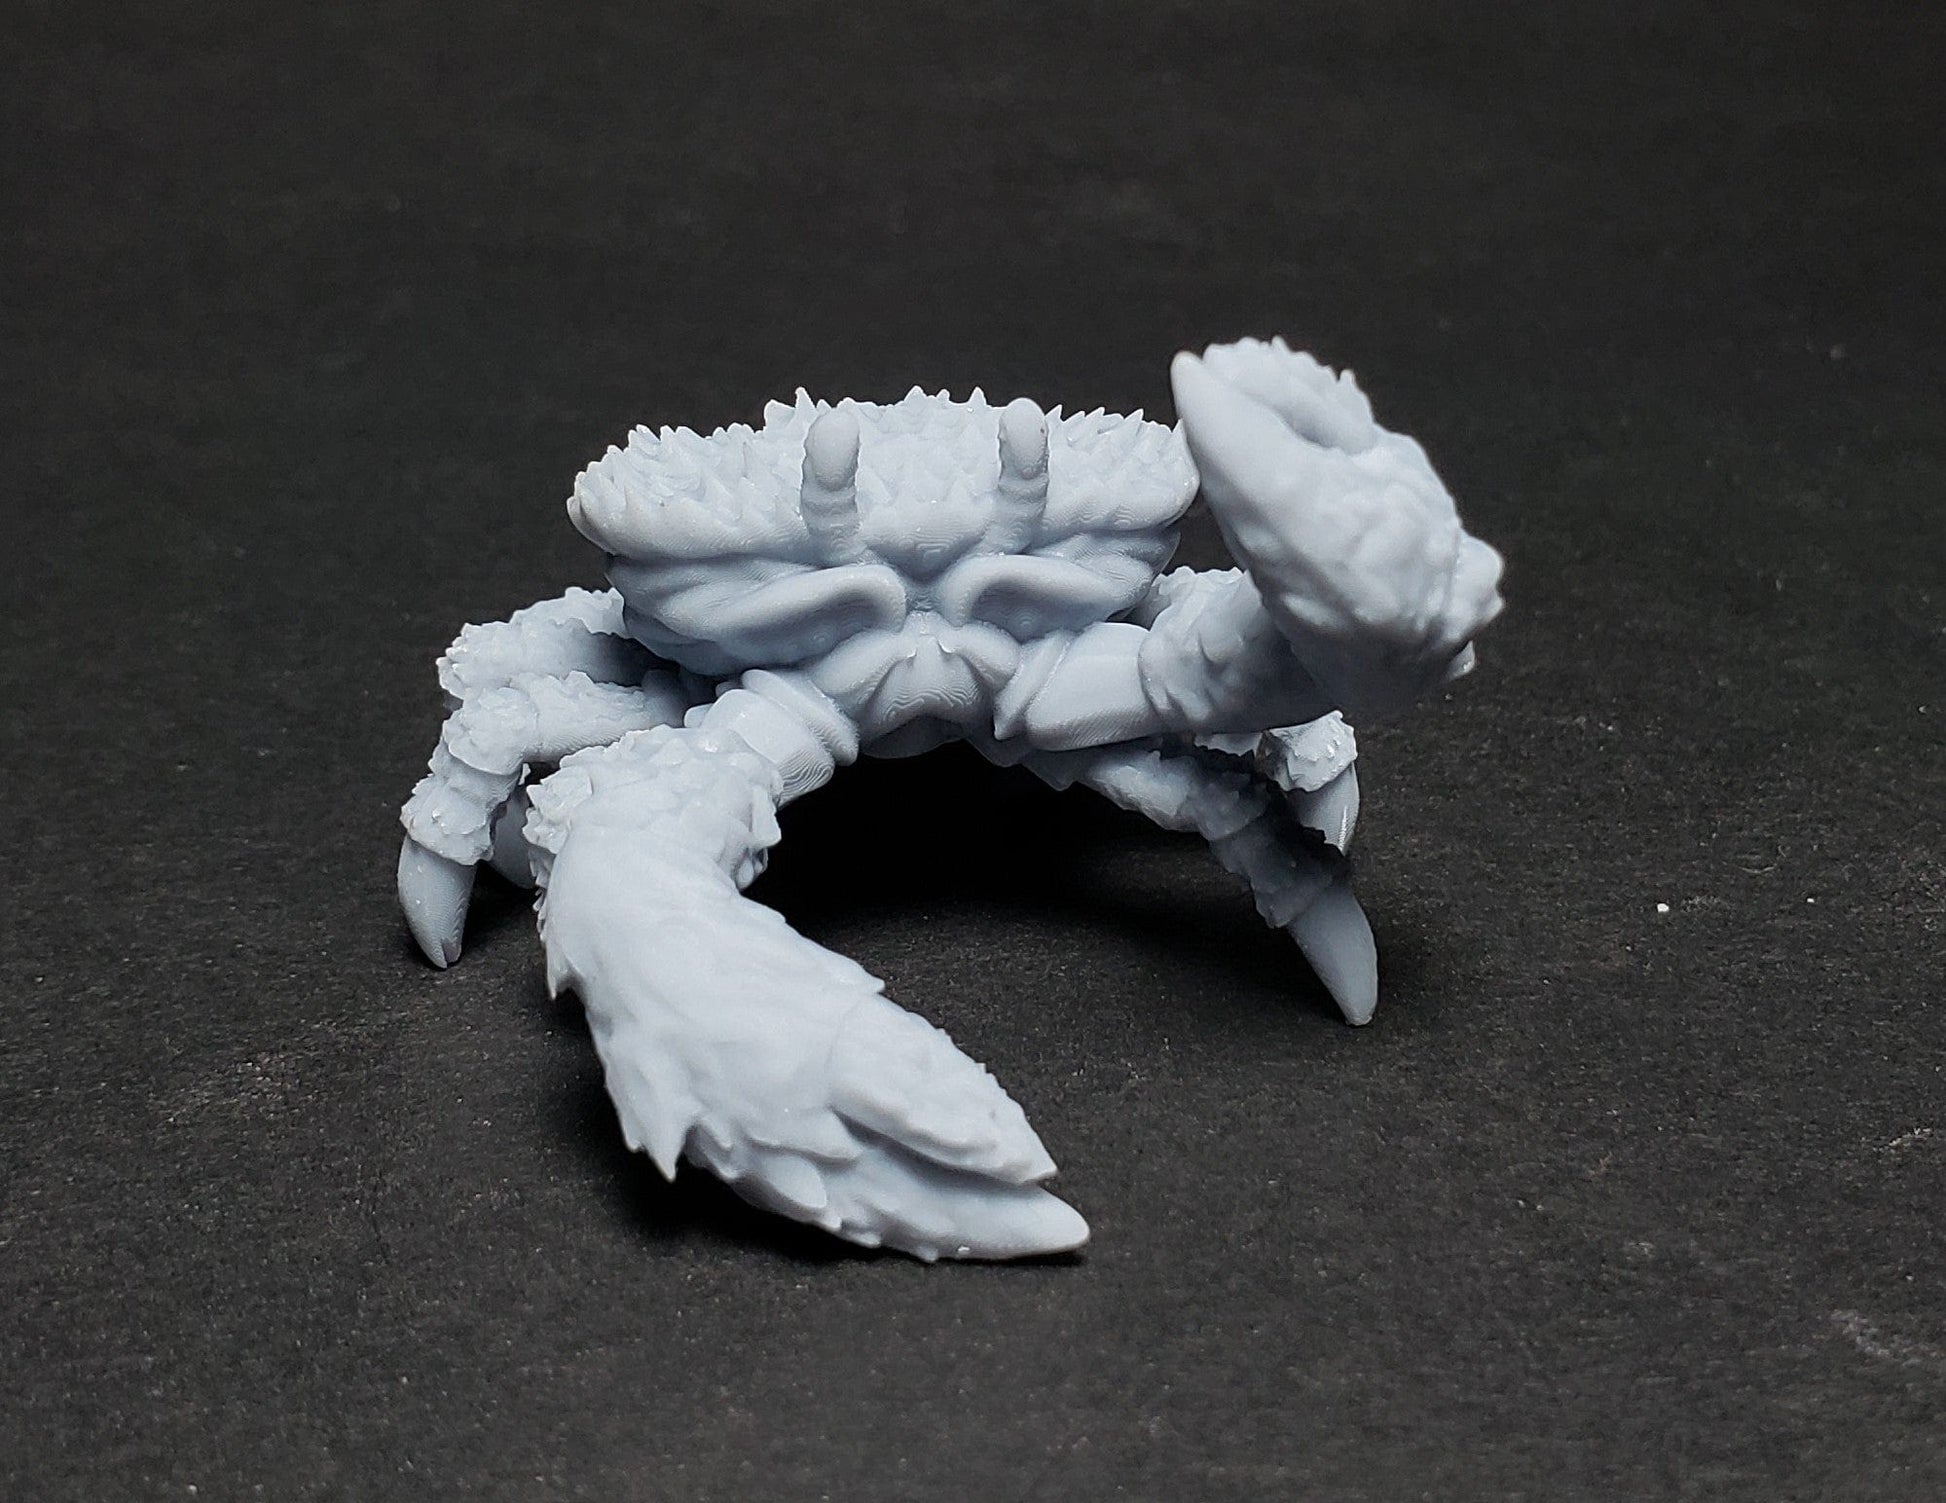 Onmioji Giant Crab